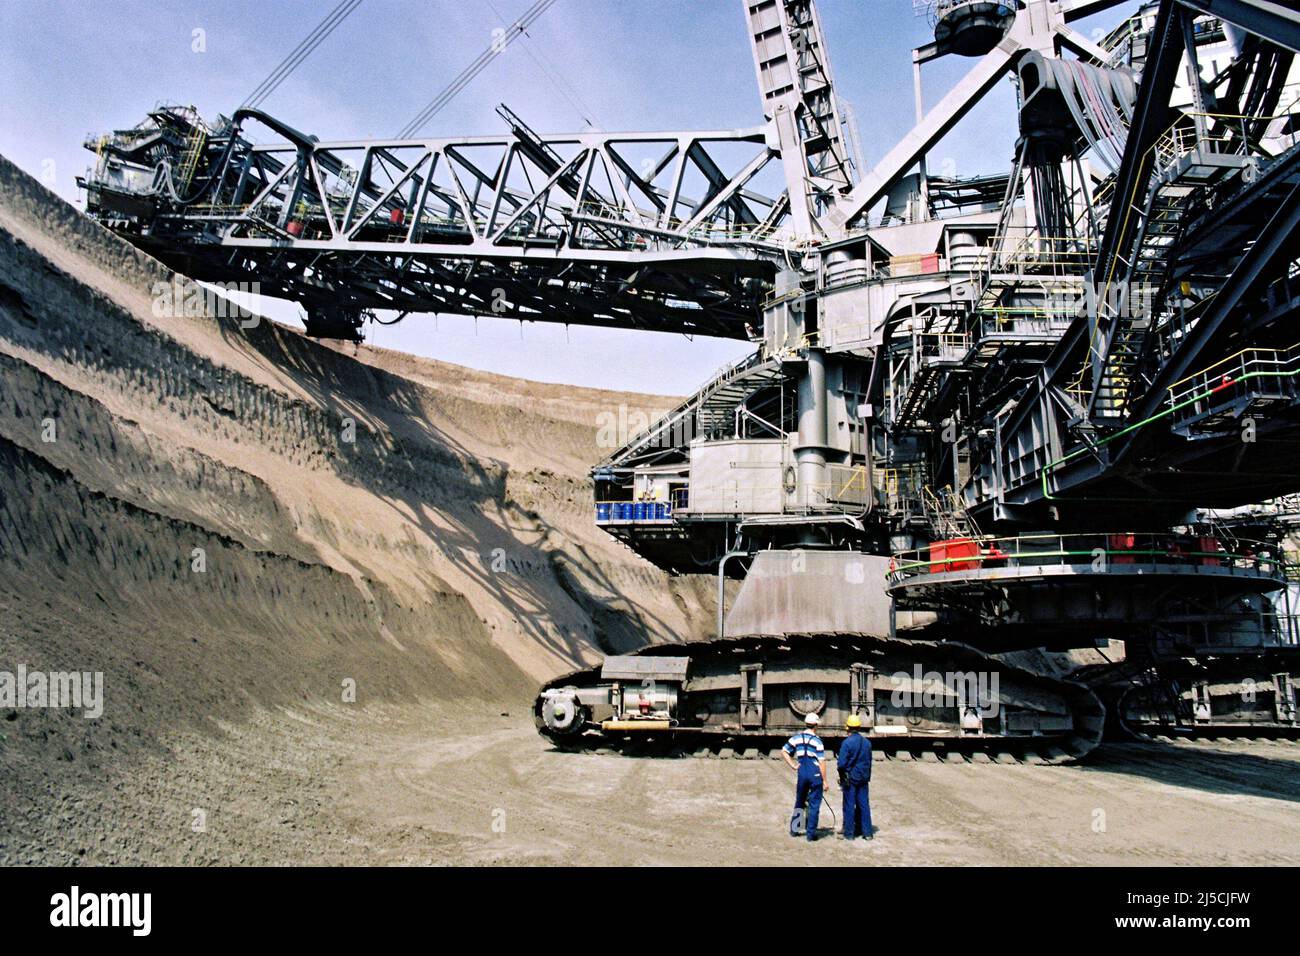 Garzweiler, May 23, 1995 - Rheinbraun lignite excavator in the Garzweiler open pit lignite mine. The Garzweiler open pit mine is a lignite open pit mine operated by RWE Power, until 2003 by RWE Rheinbraun AG, in the Rhenish lignite mining region. [automated translation] Stock Photo